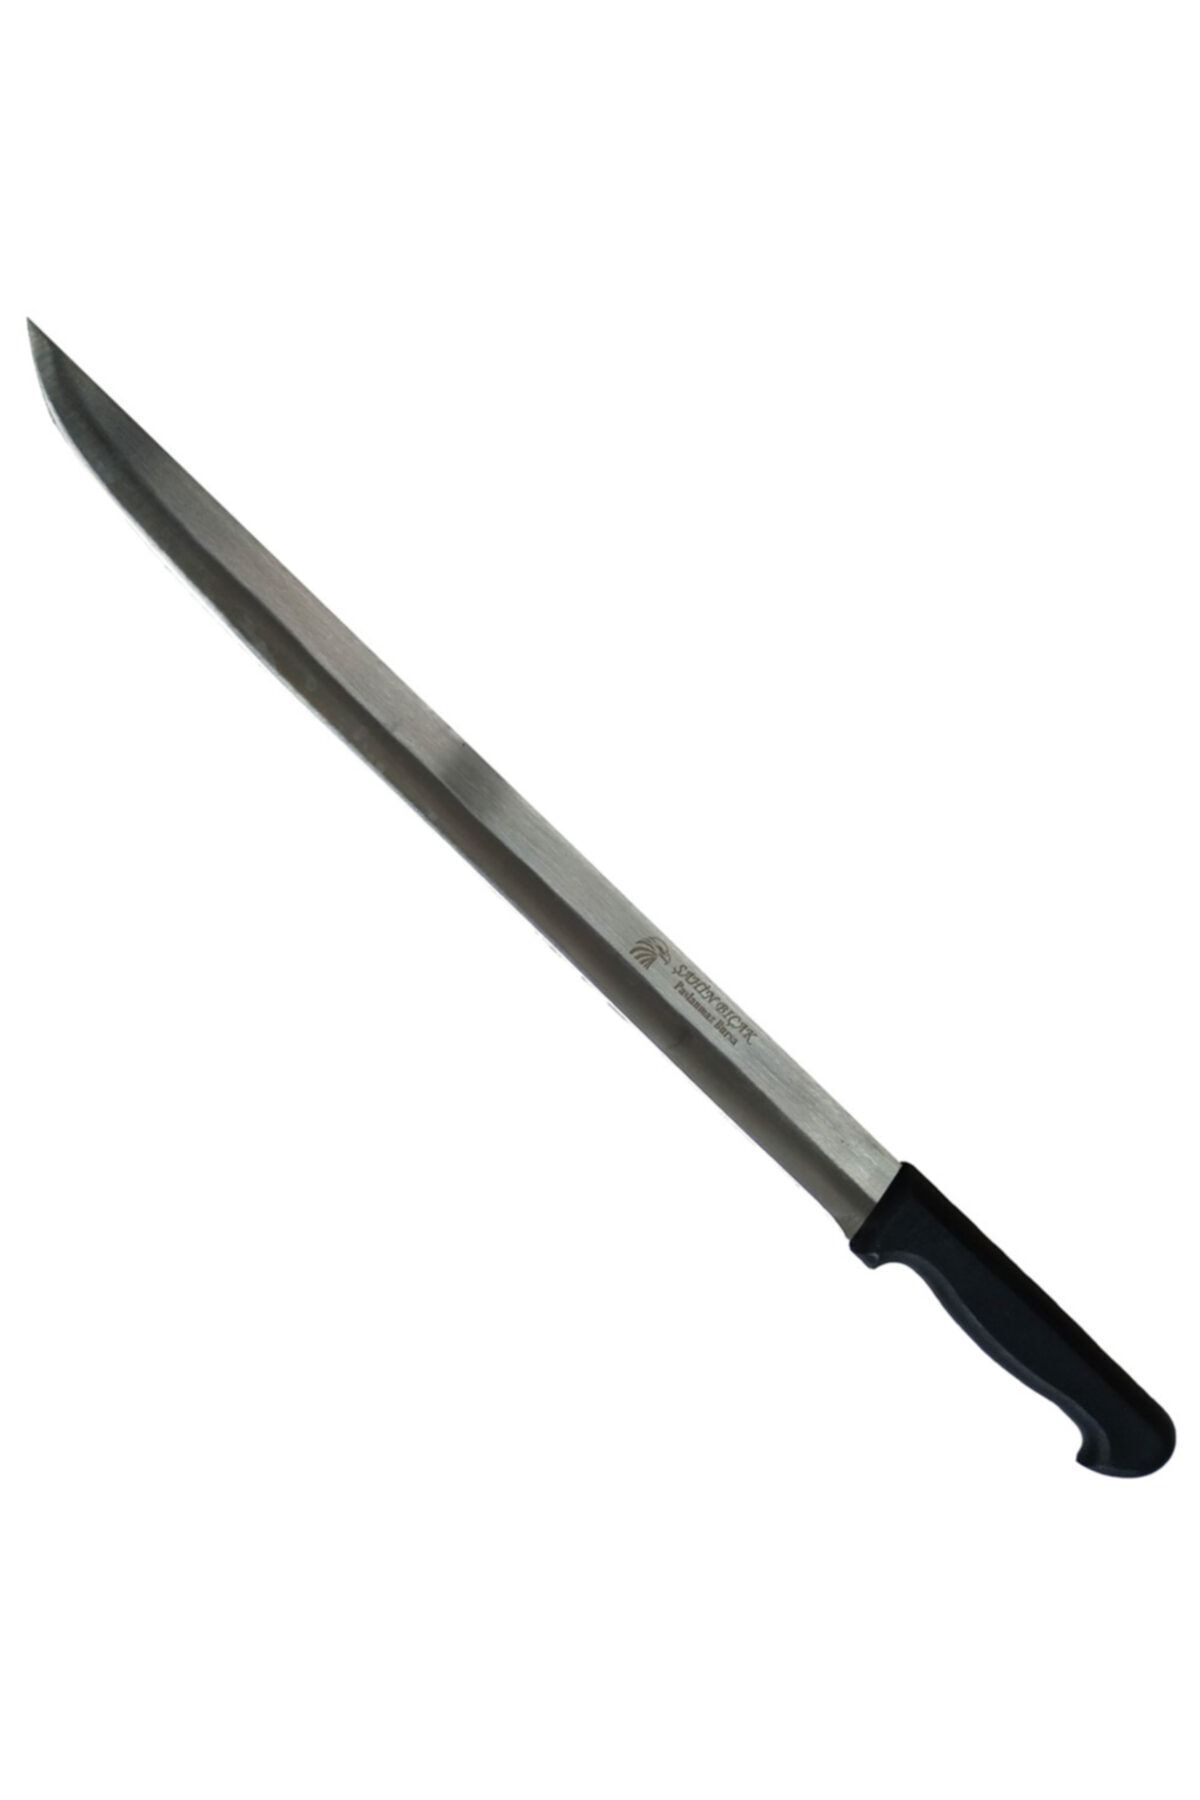 Şahin Plastik Sap Çağ Kebabı Bıçağı 40 cm